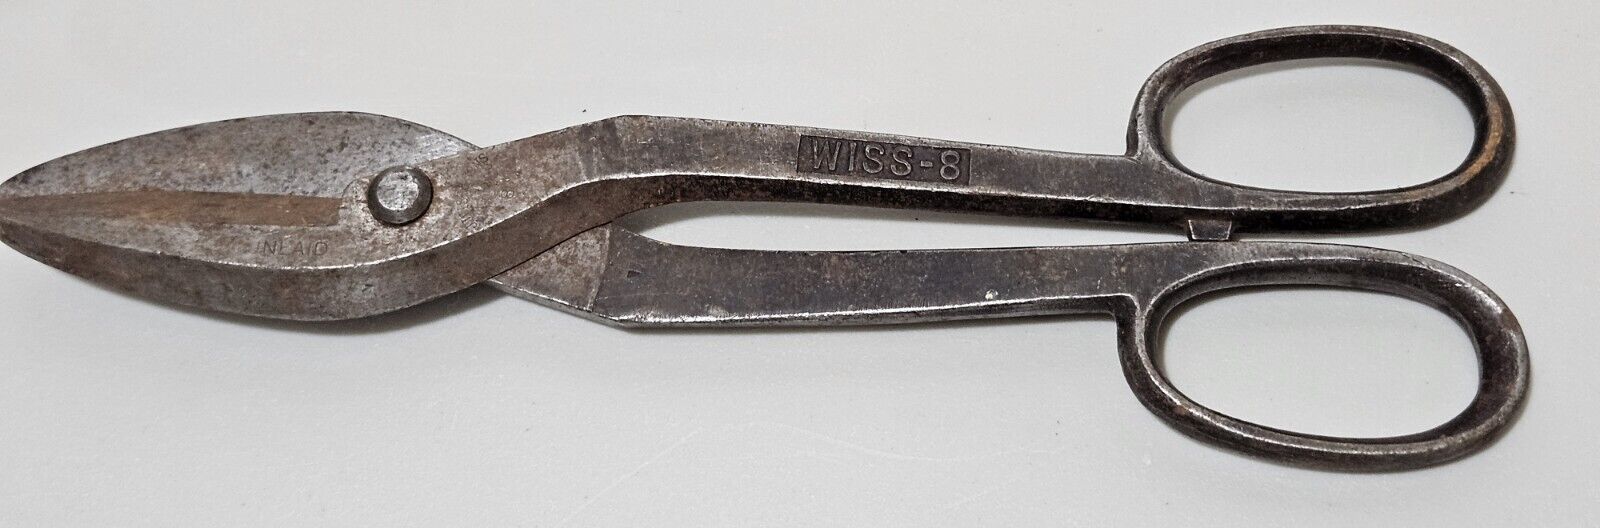 vintage wiss inlaid scissors